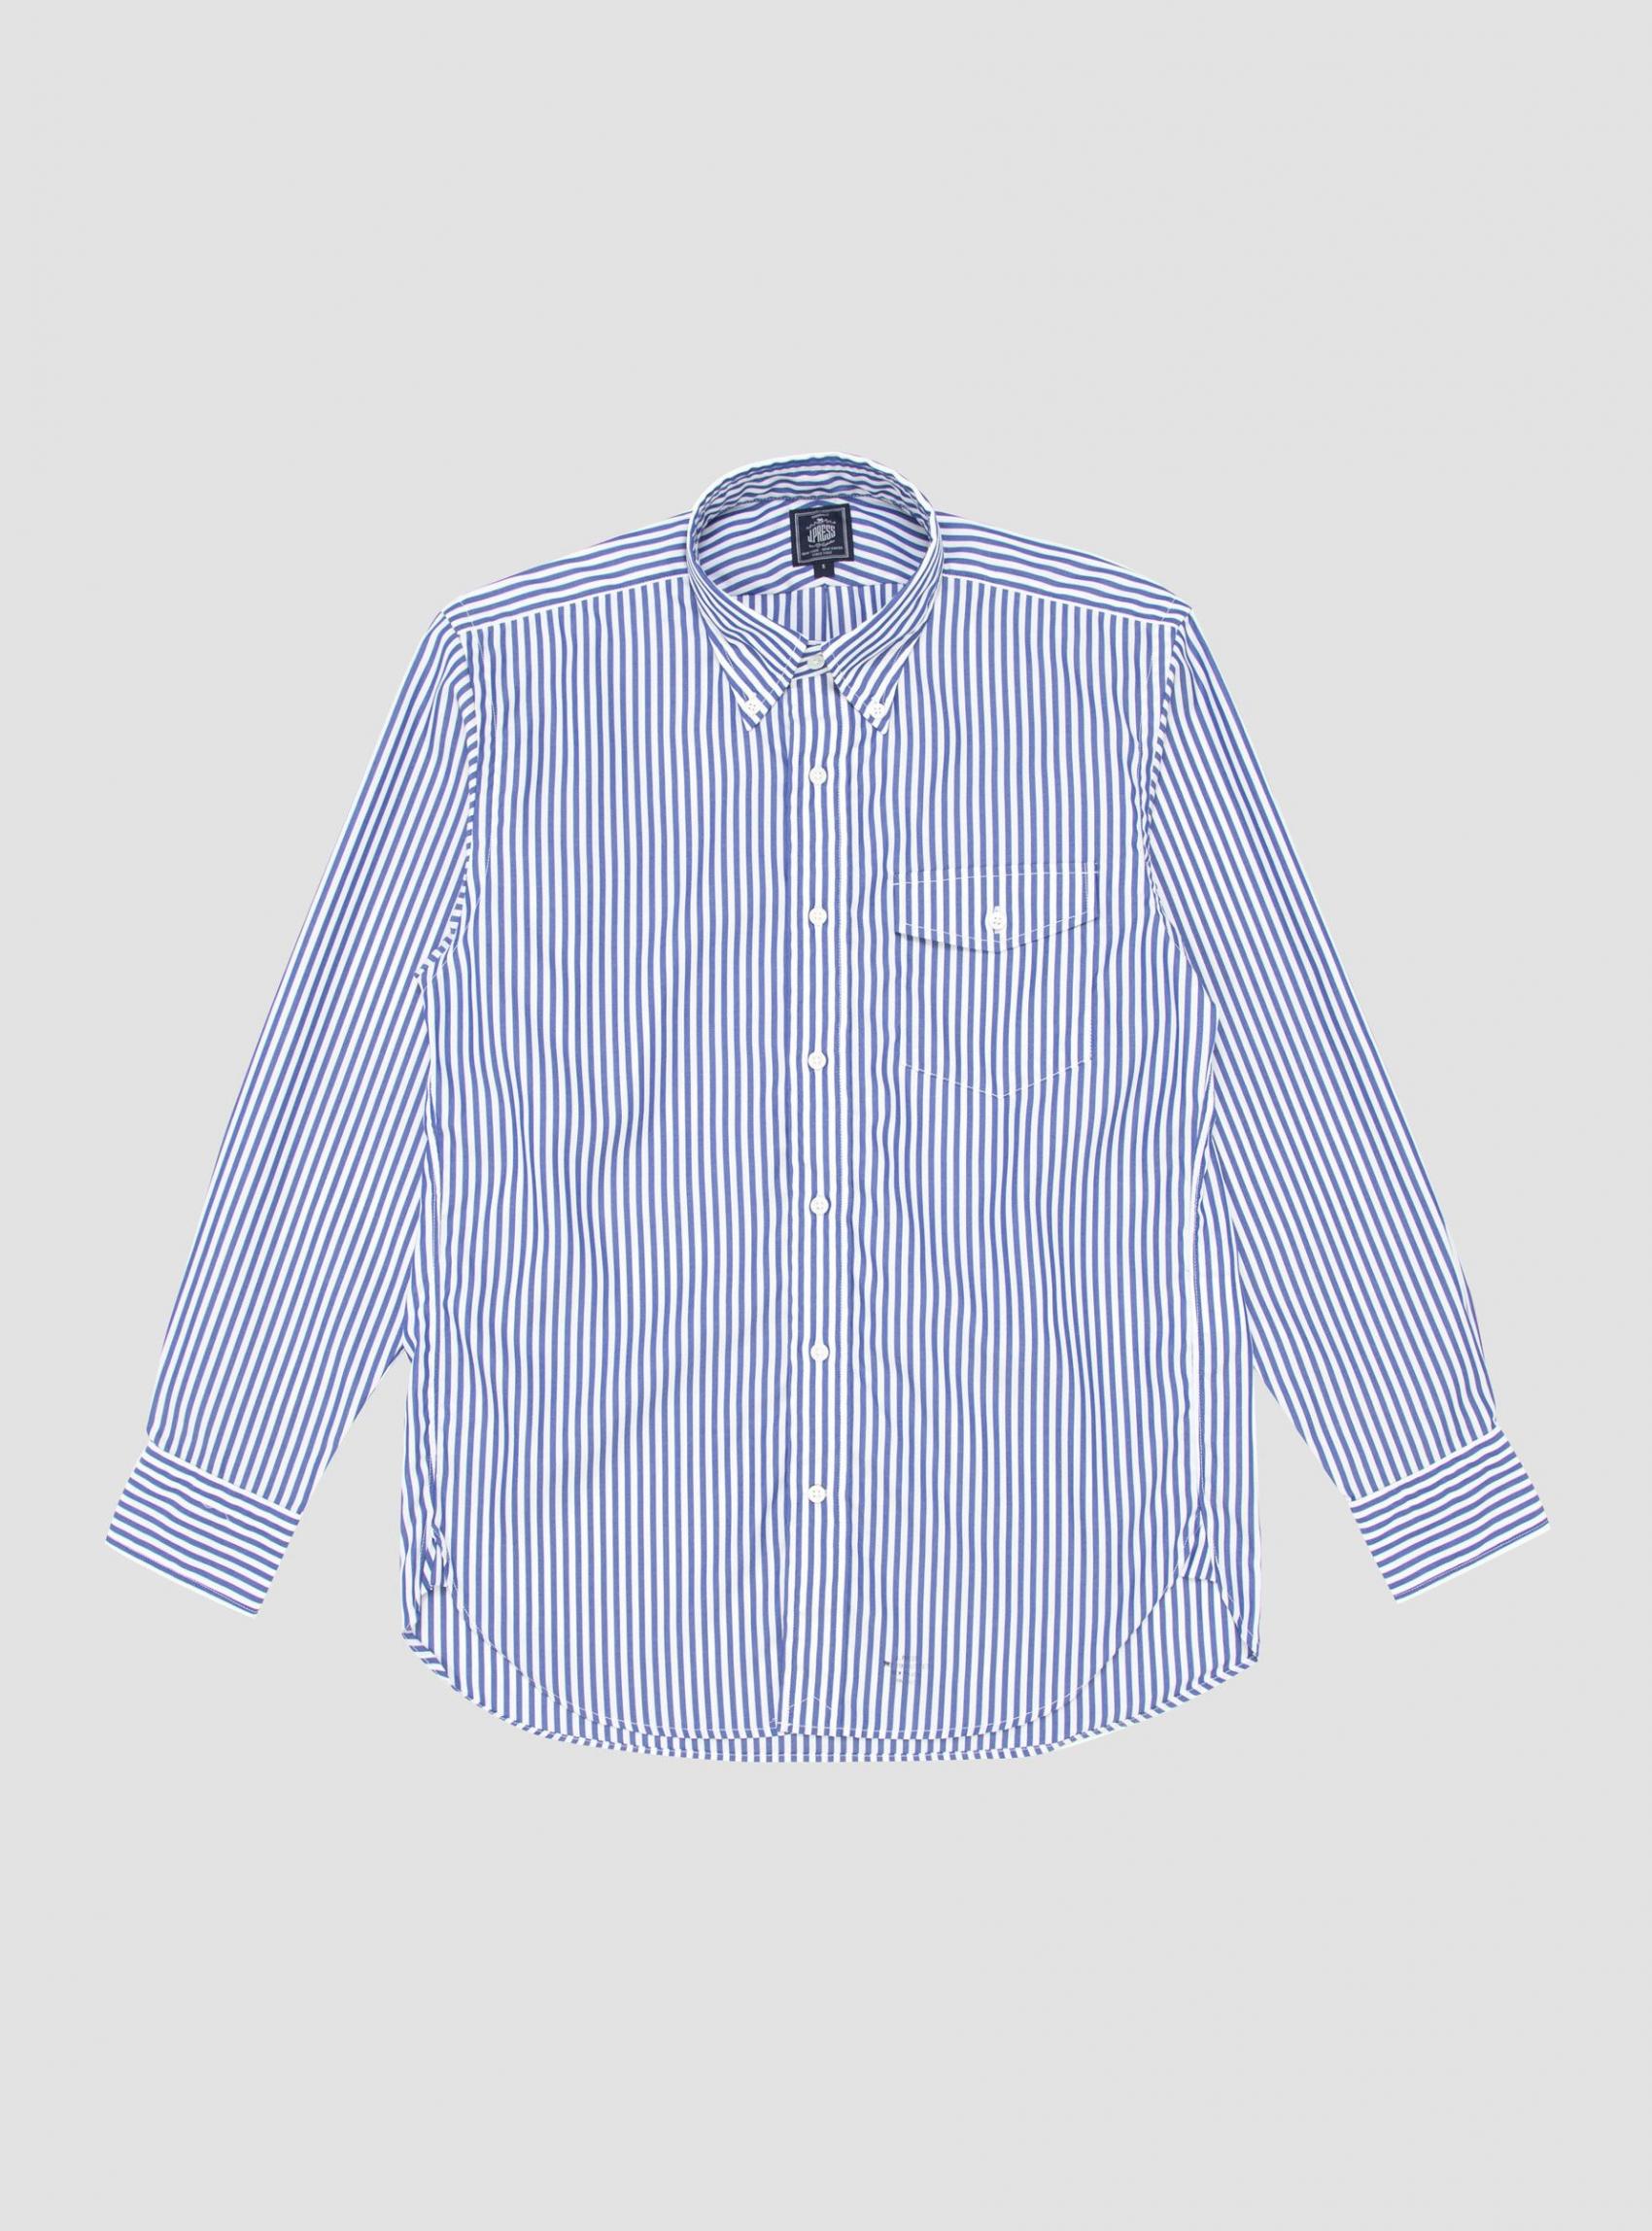 Shirts | J. Press Mens Broadcloth B.D. Authentic Fit Shirt Blue & White Stripe Blue & White Stripe